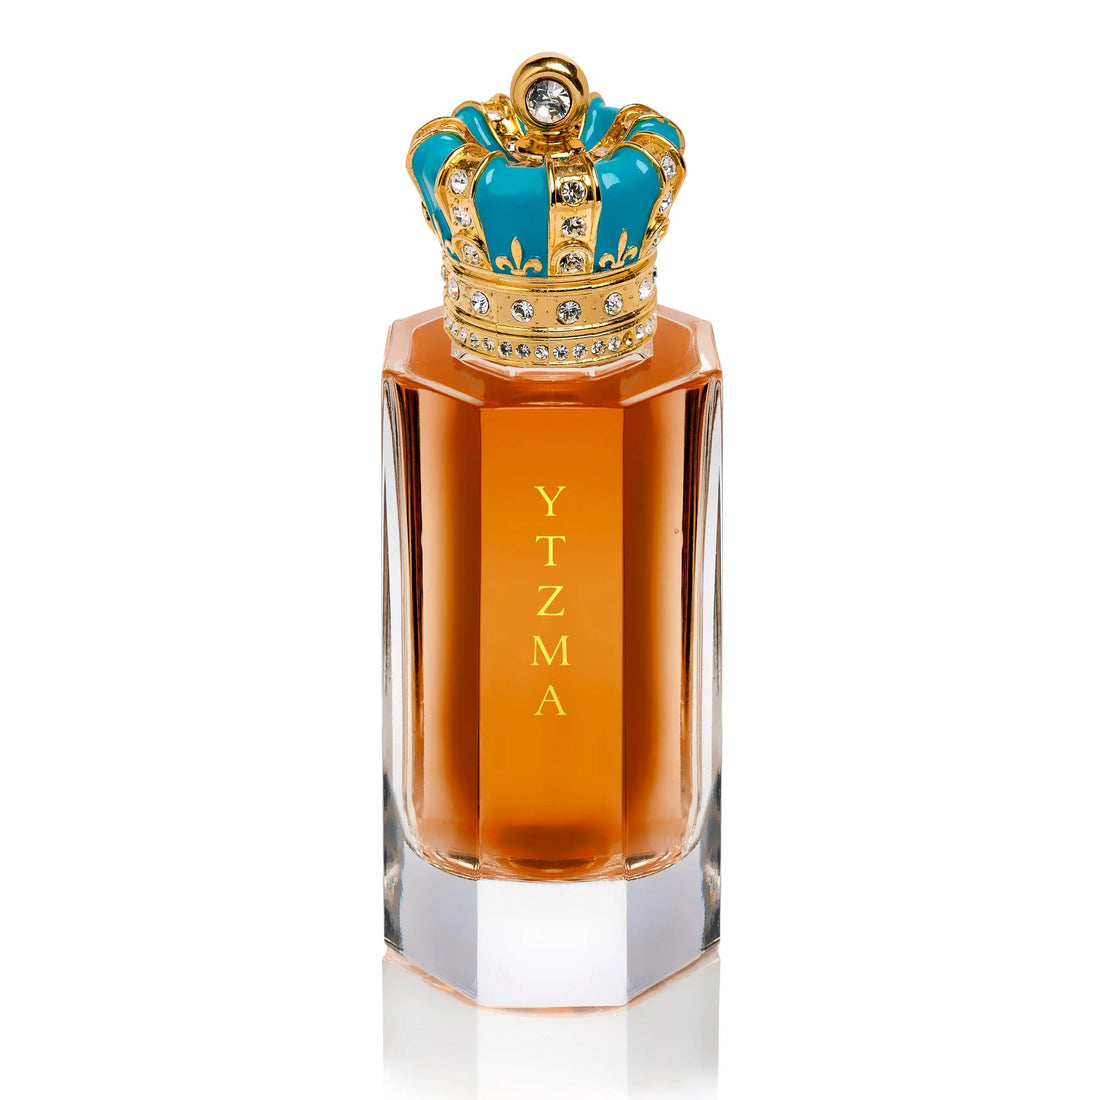 Ytzma Royal Crown – 100 ml